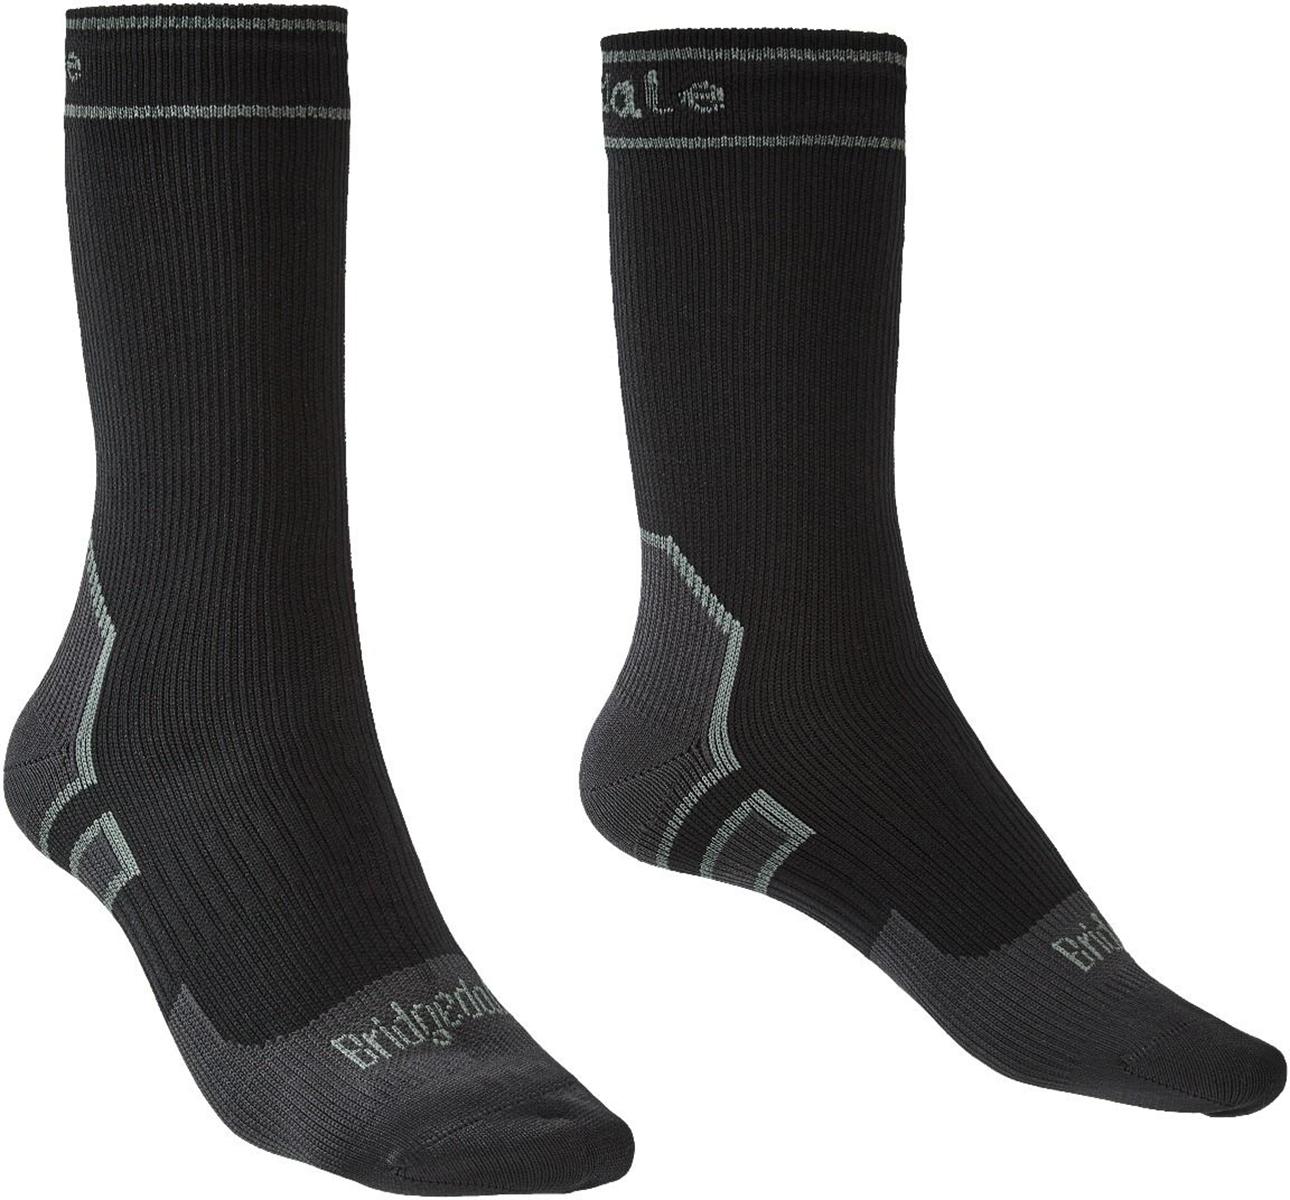 Bridgedale Stormsock Lightweight Waterproof Boot Socks - Charcoal